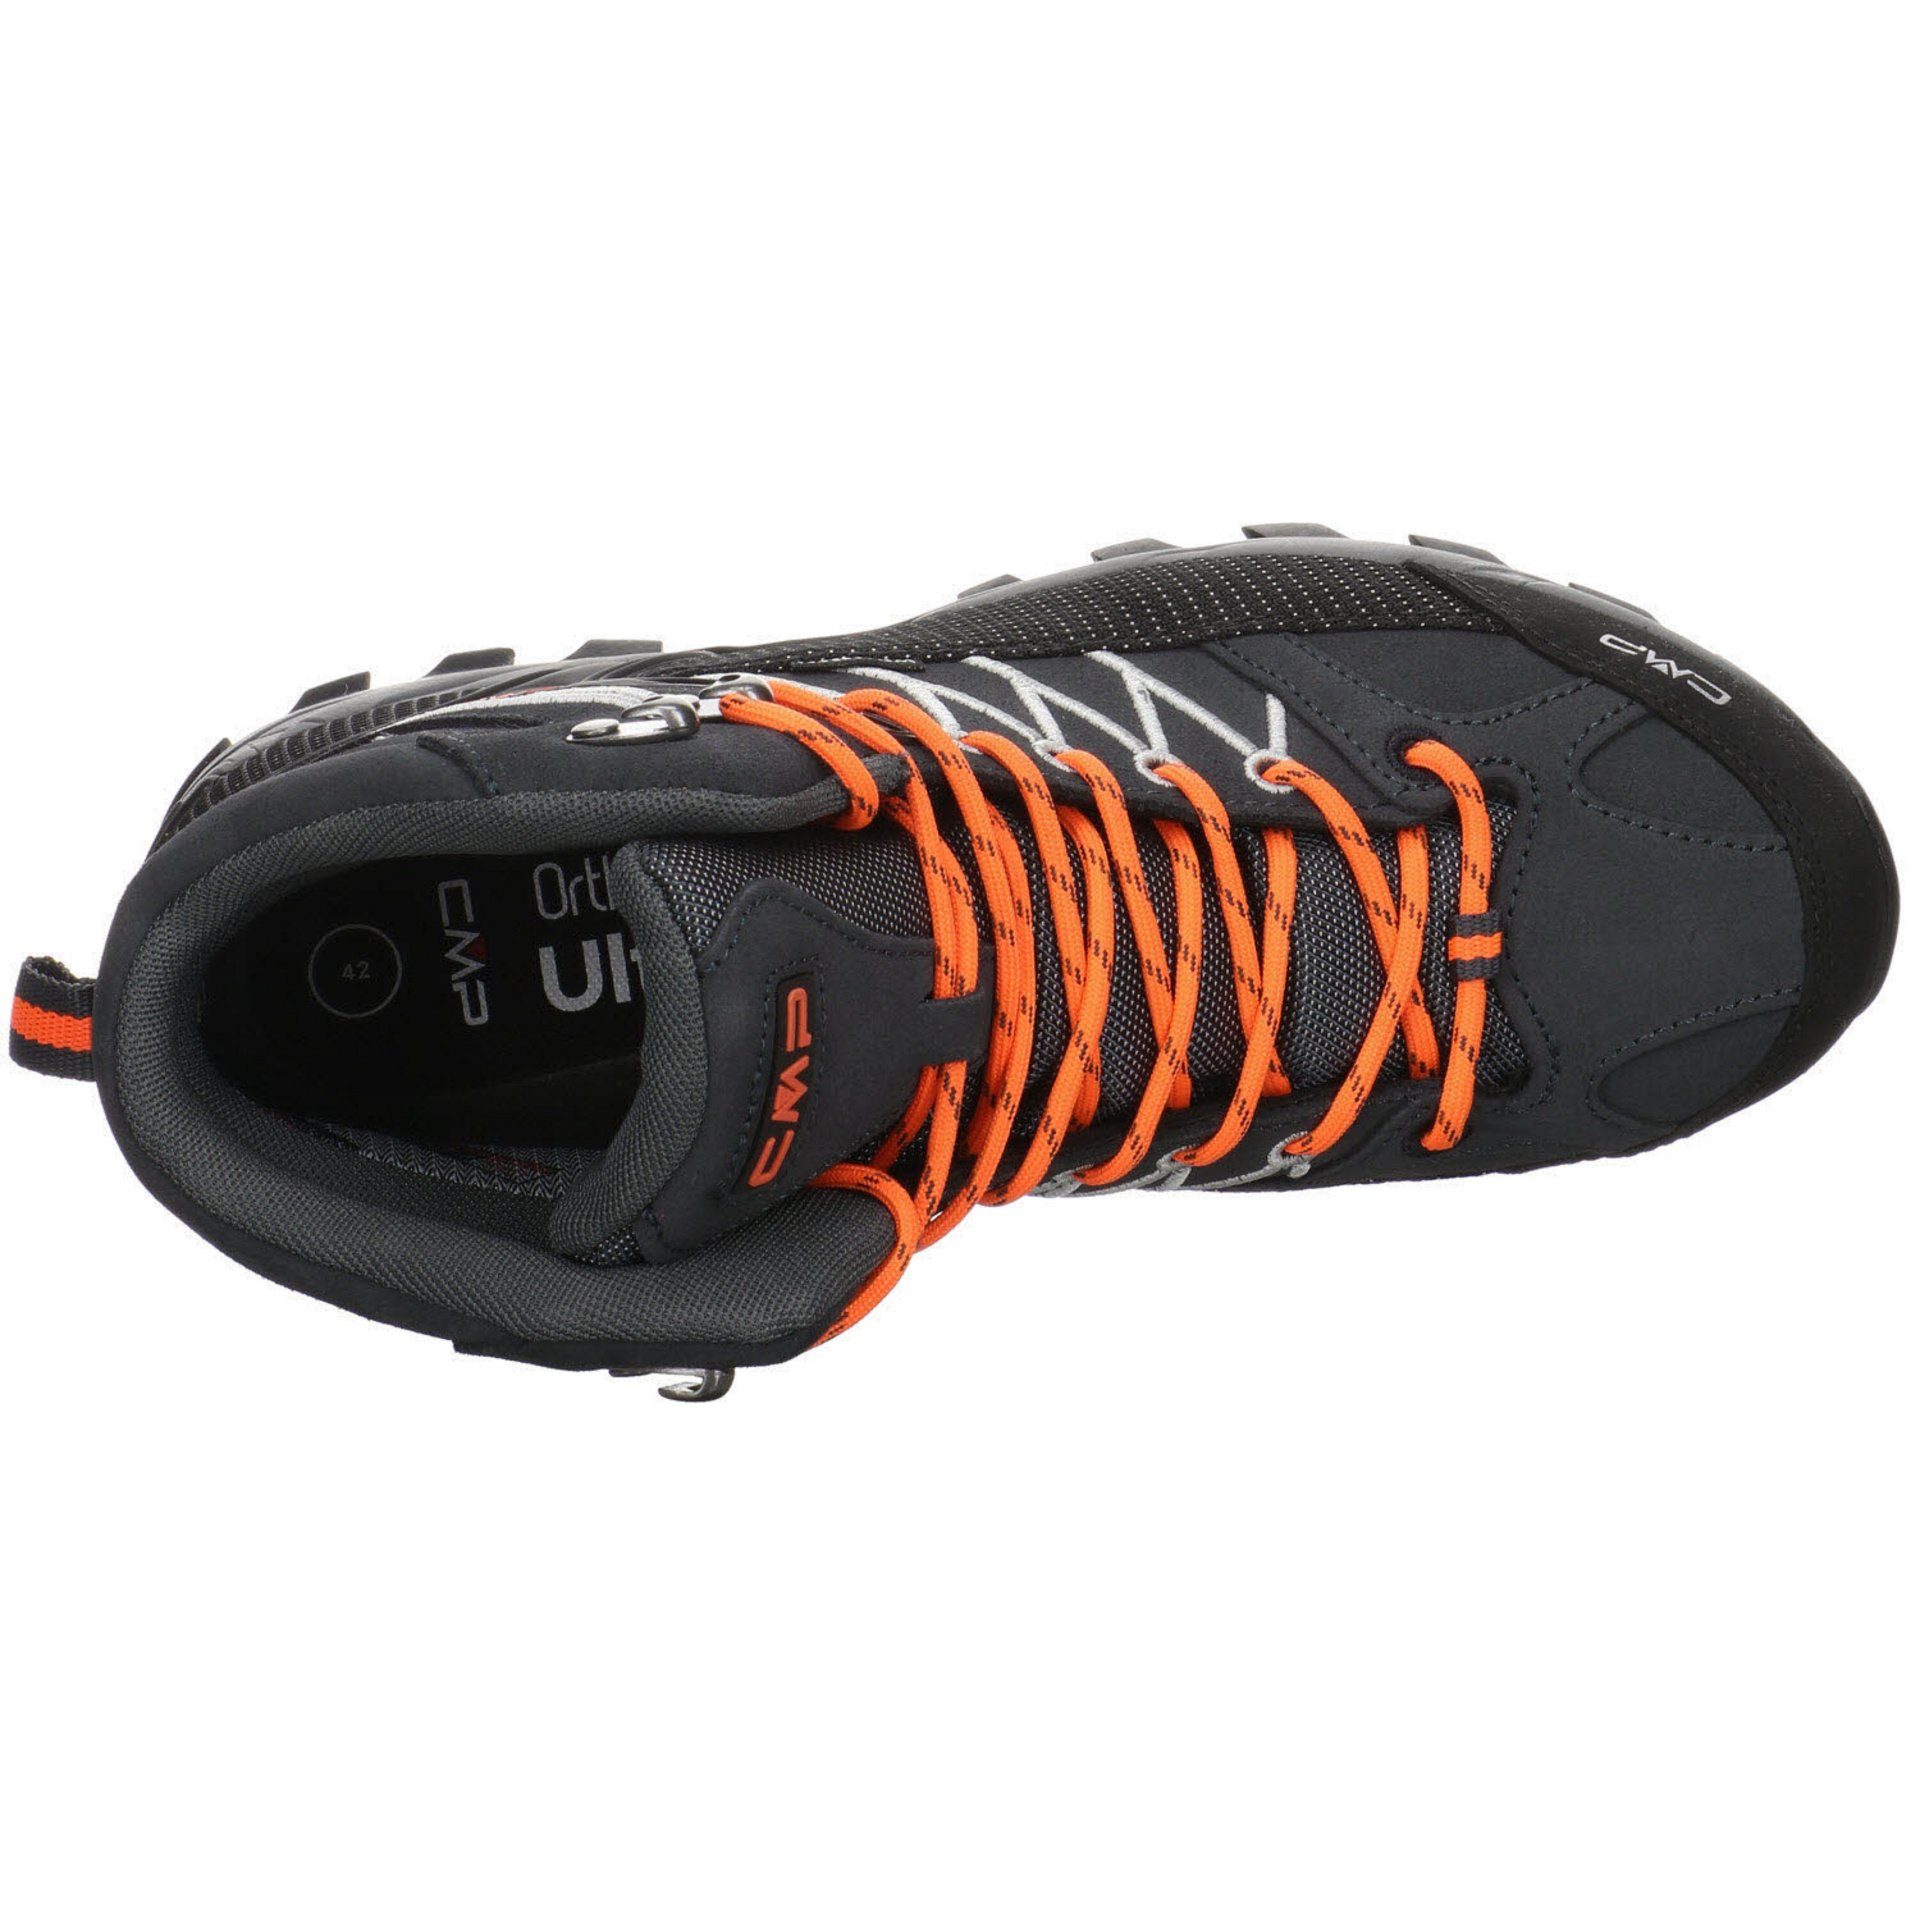 CMP Herren Outdoorschuh Schuhe Leder-/Textilkombination Outdoor 56UE Mid Rigel Outdoorschuh ORANGE ANTRACITE-FLASH